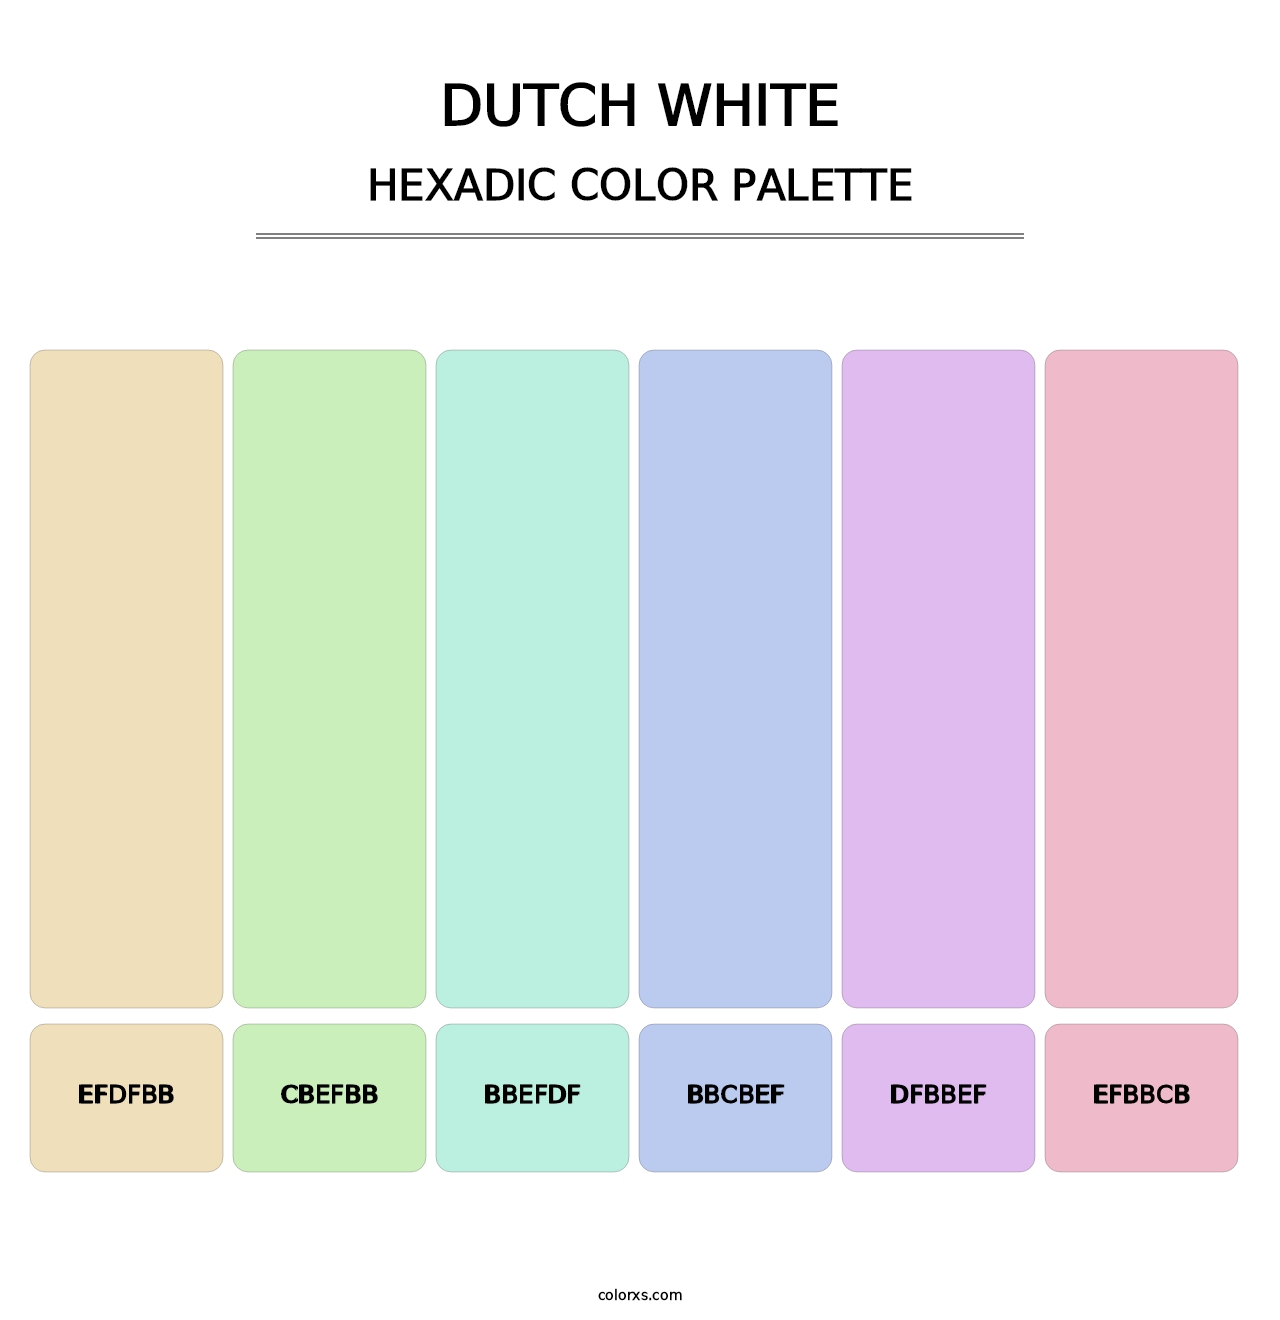 Dutch White - Hexadic Color Palette